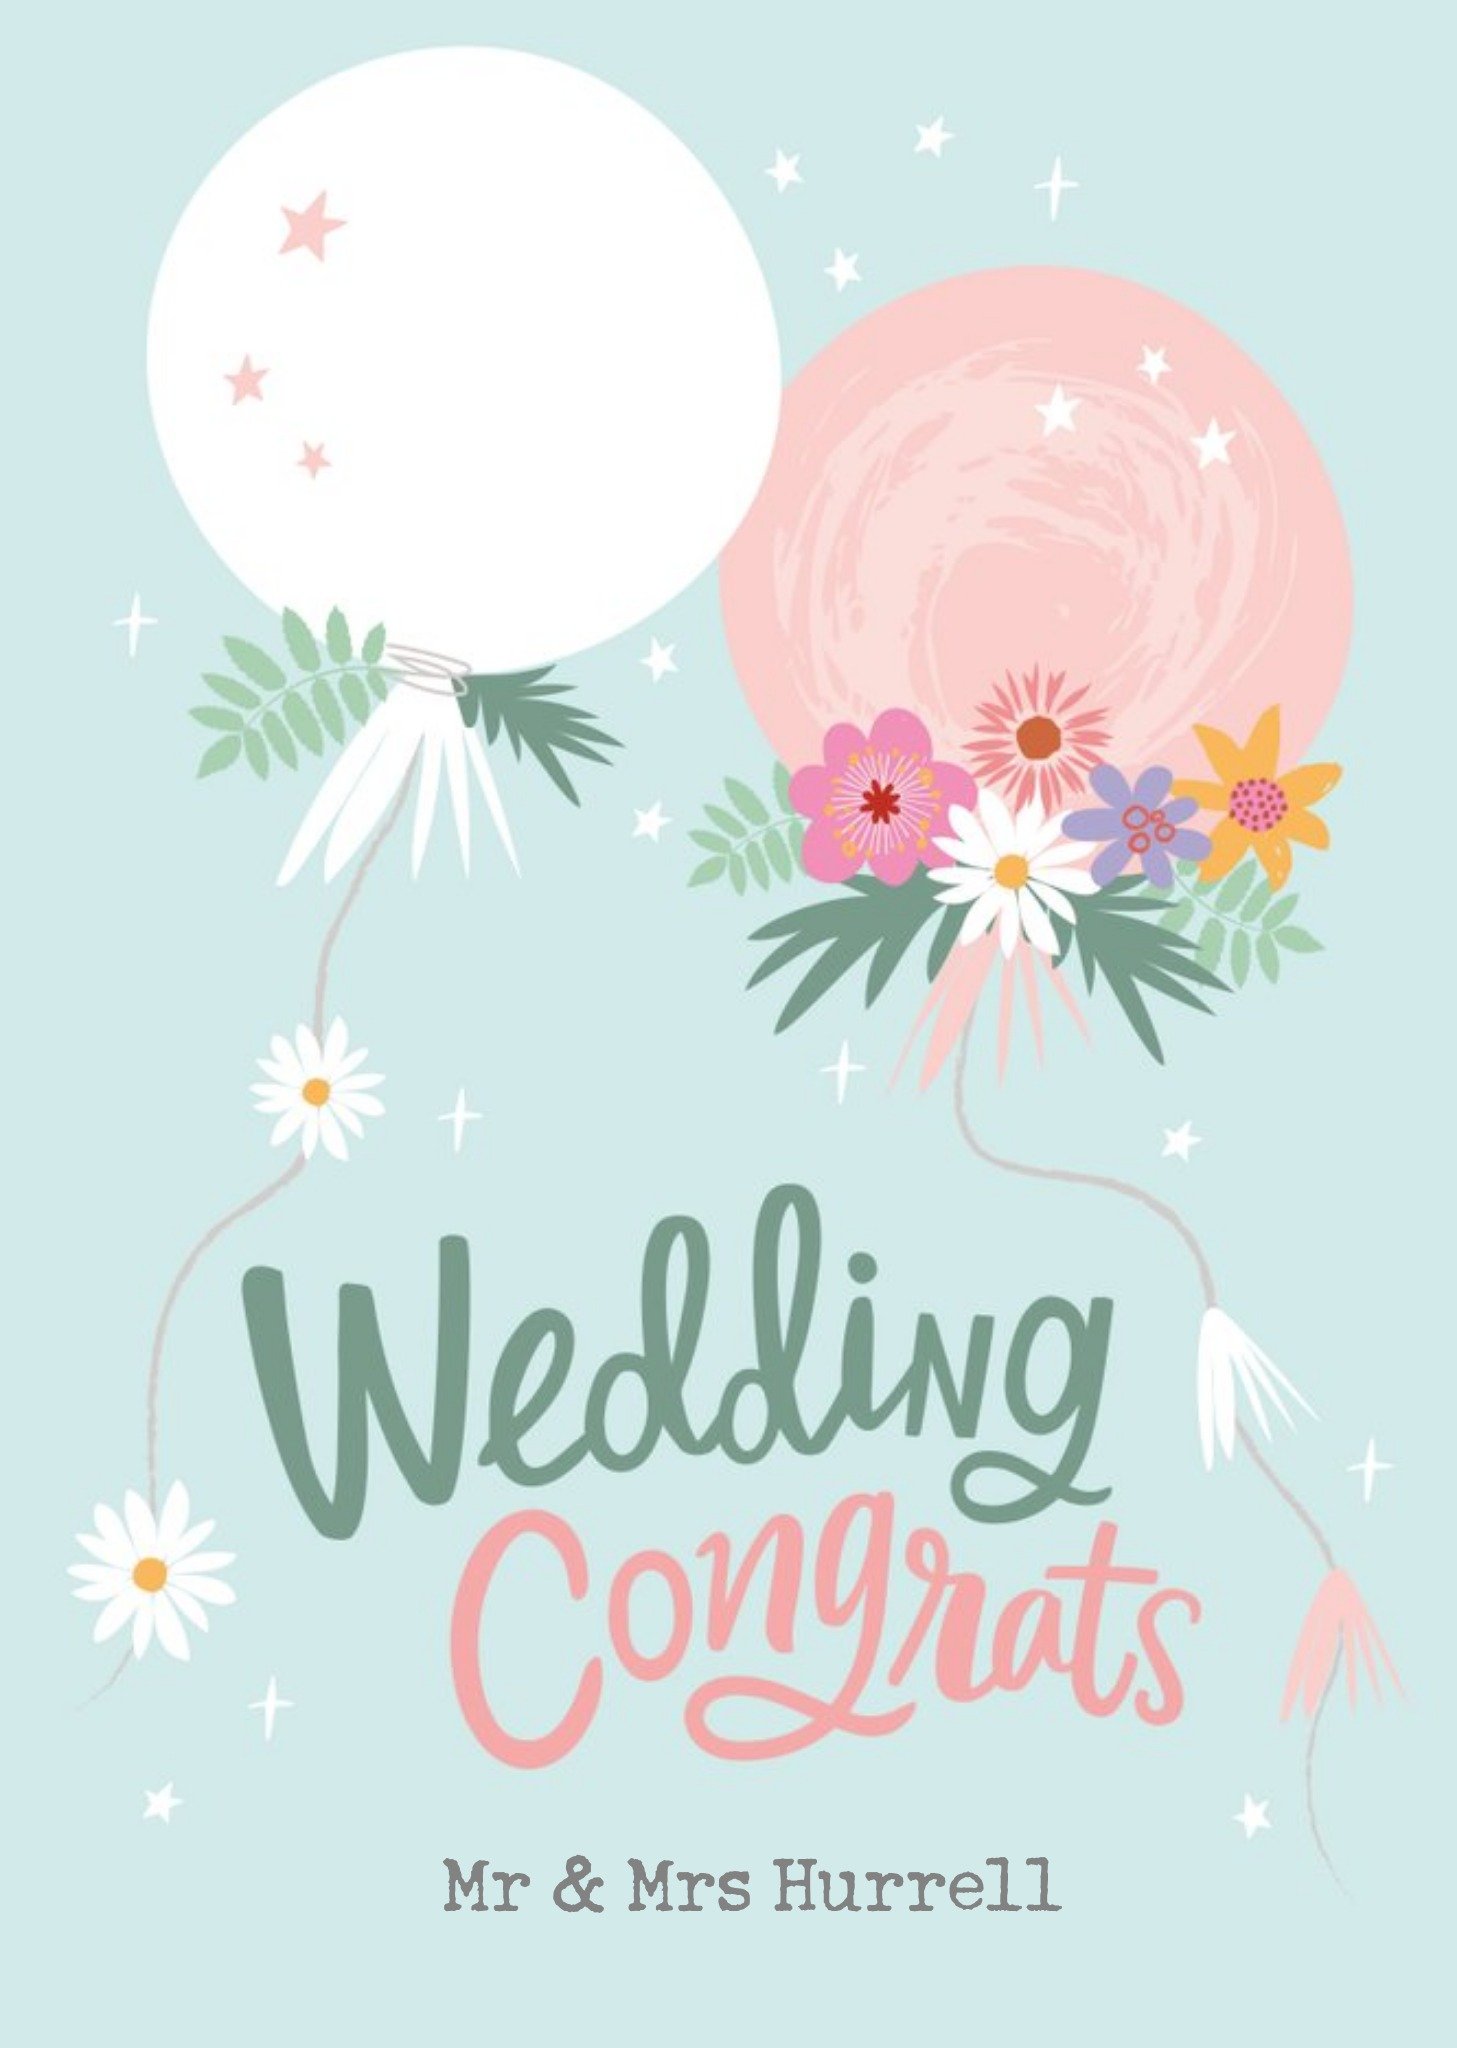 Friends Dotty Black Illustration Floral Couple Wedding Congratulations Card, Large